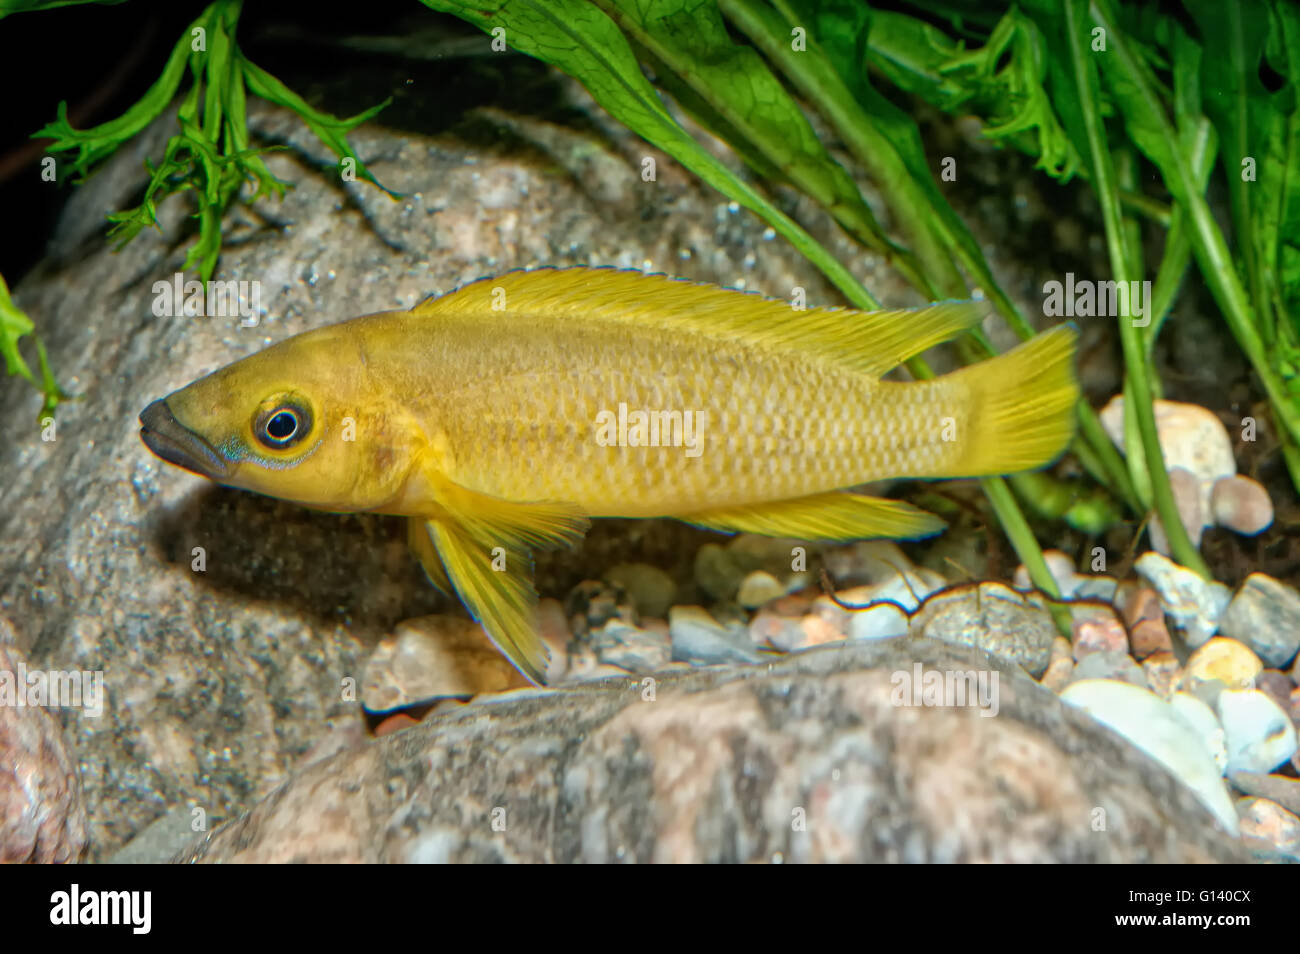 Tropical aquarium fish from genus Neolamprologus Stock Photo